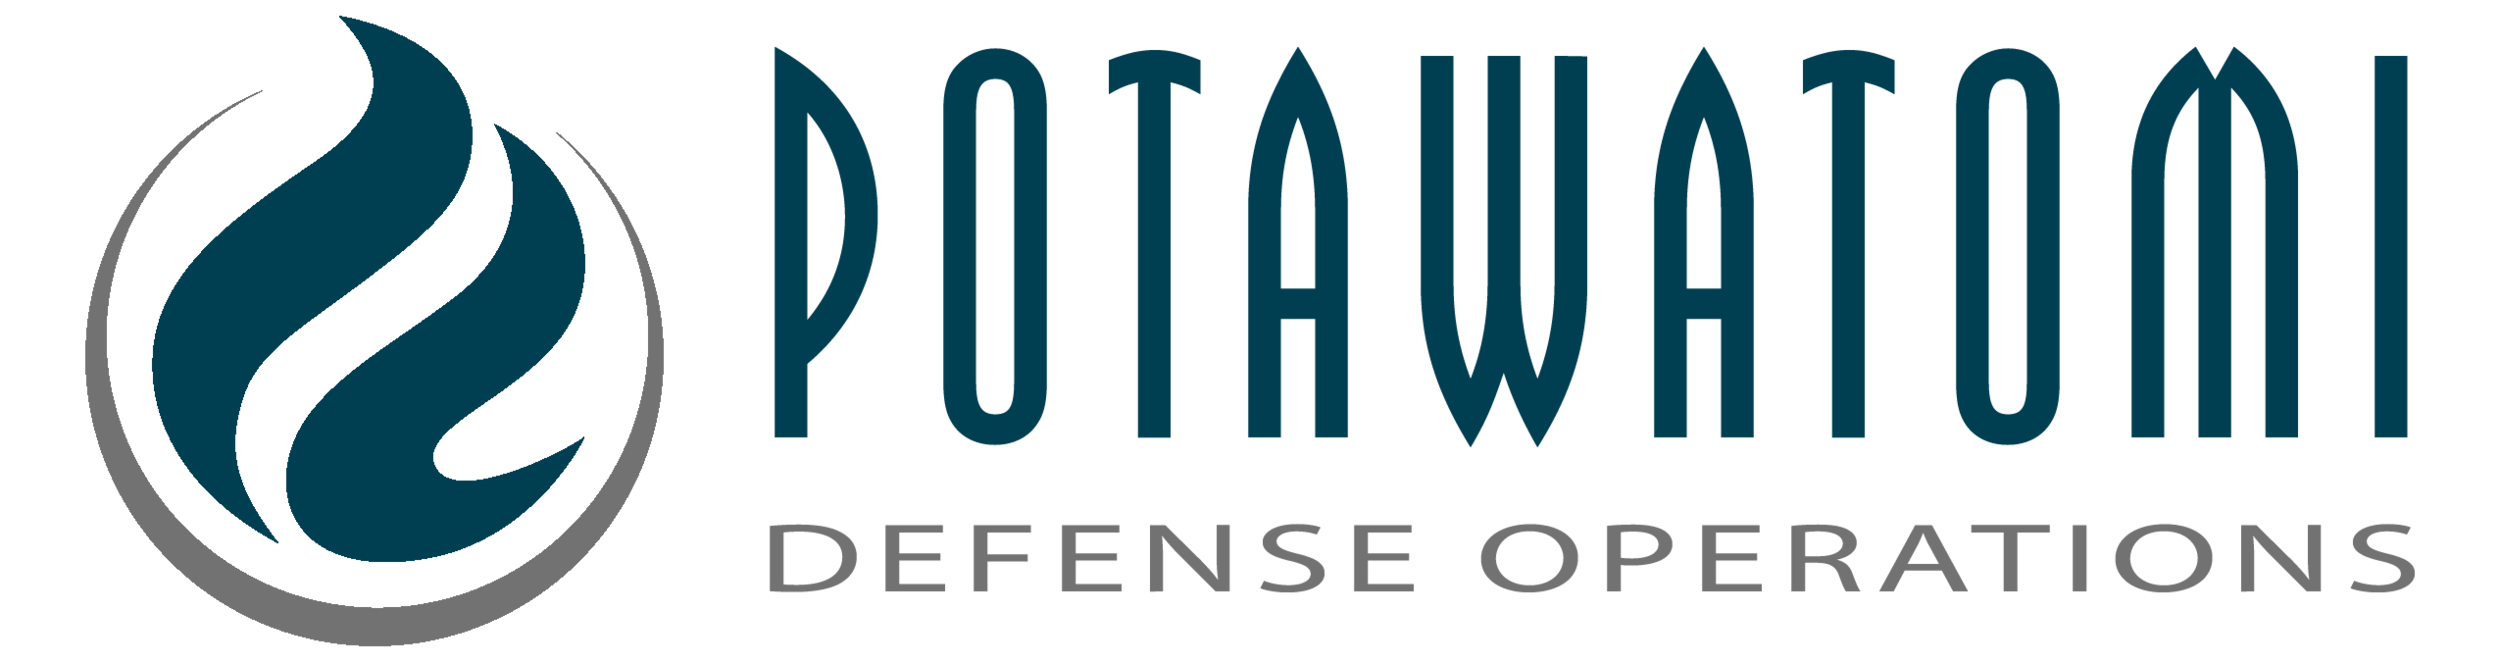 Potawatomi Defense Operations